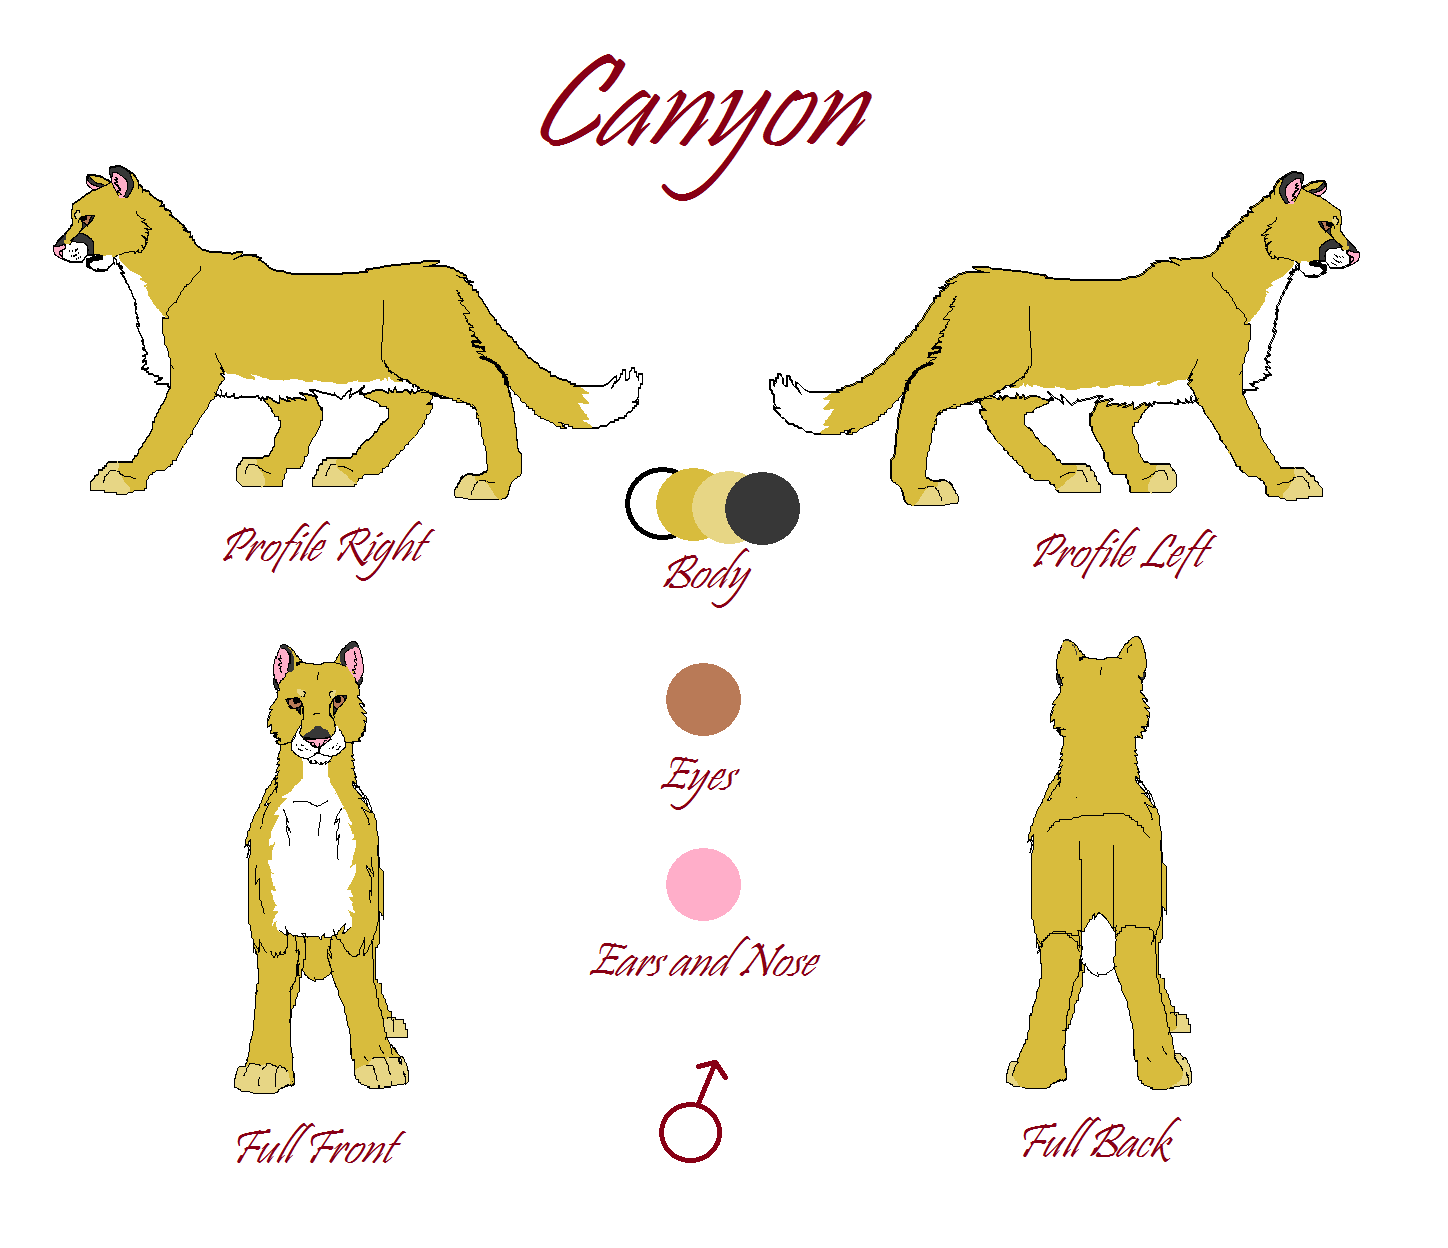 Canyon Reference Sheet 2013